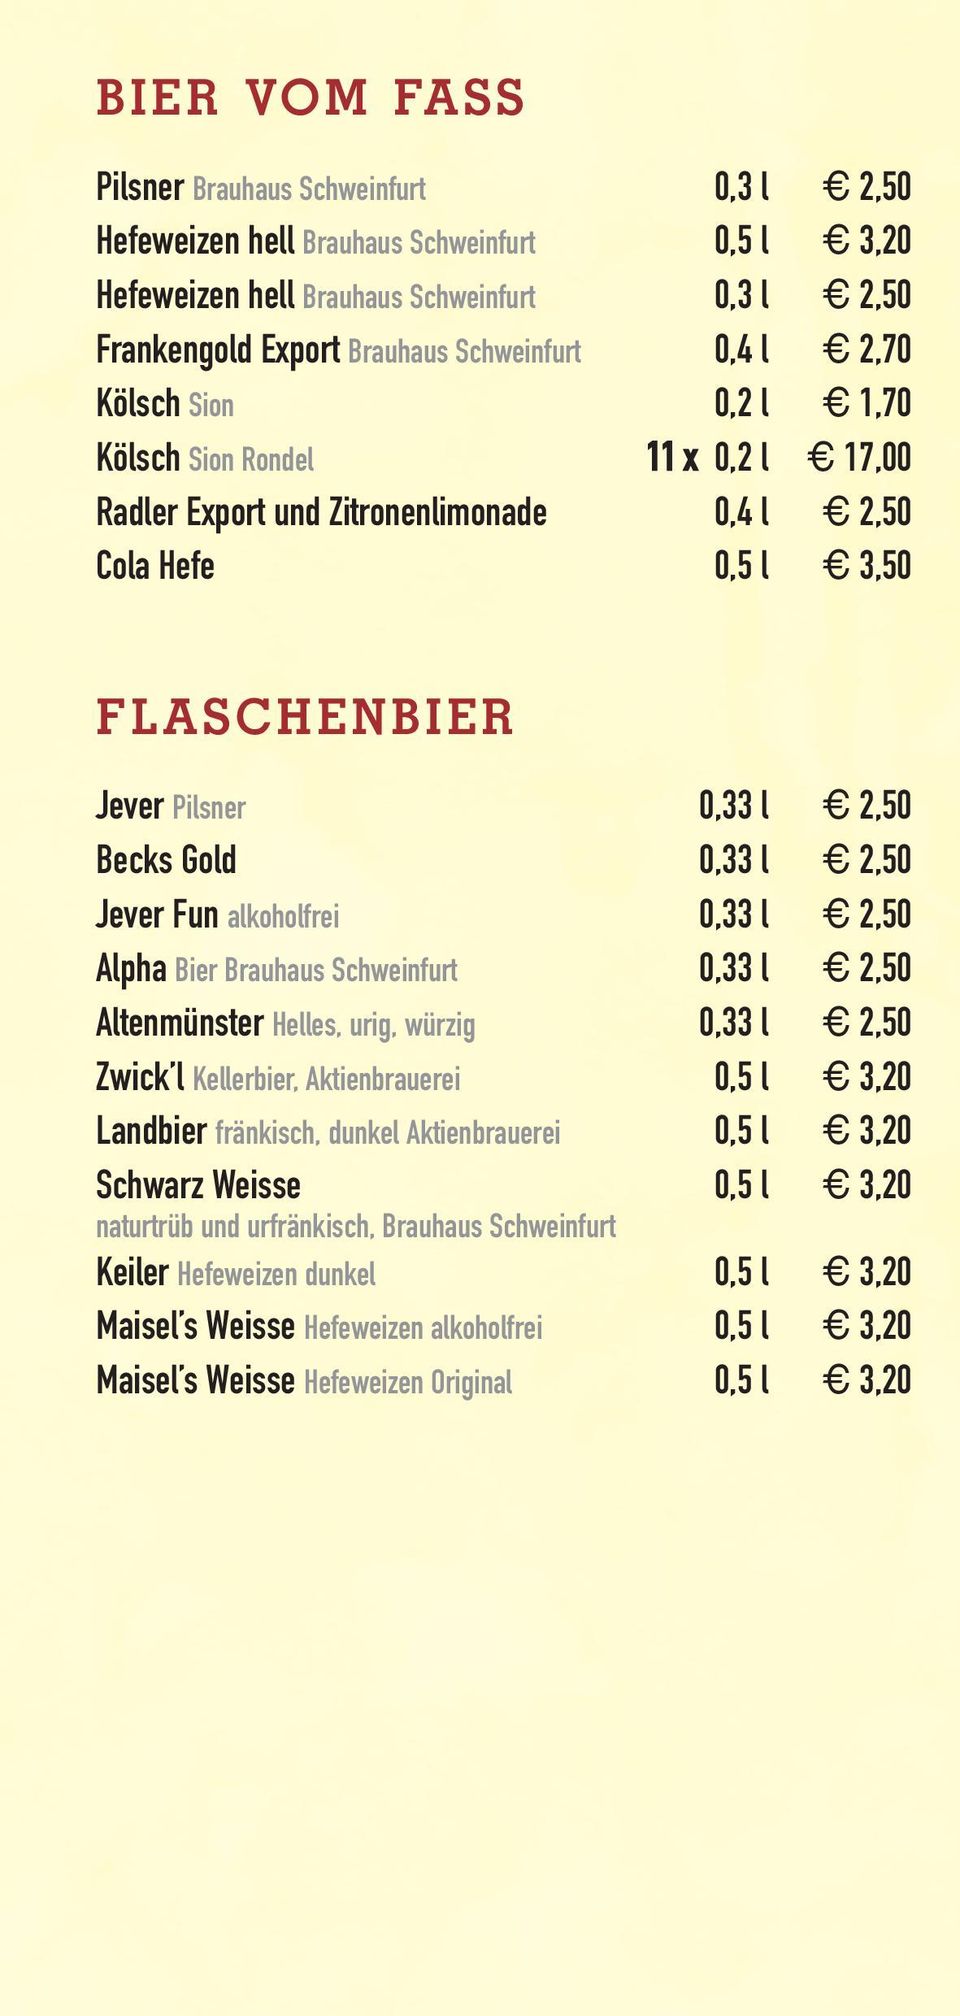 Fun alkoholfrei 0,33 l 2,50 Alpha Bier Brauhaus Schweinfurt 0,33 l 2,50 Altenmünster Helles, urig, würzig 0,33 l 2,50 Zwick l Kellerbier, Aktienbrauerei 0,5 l 3,20 Landbier fränkisch, dunkel